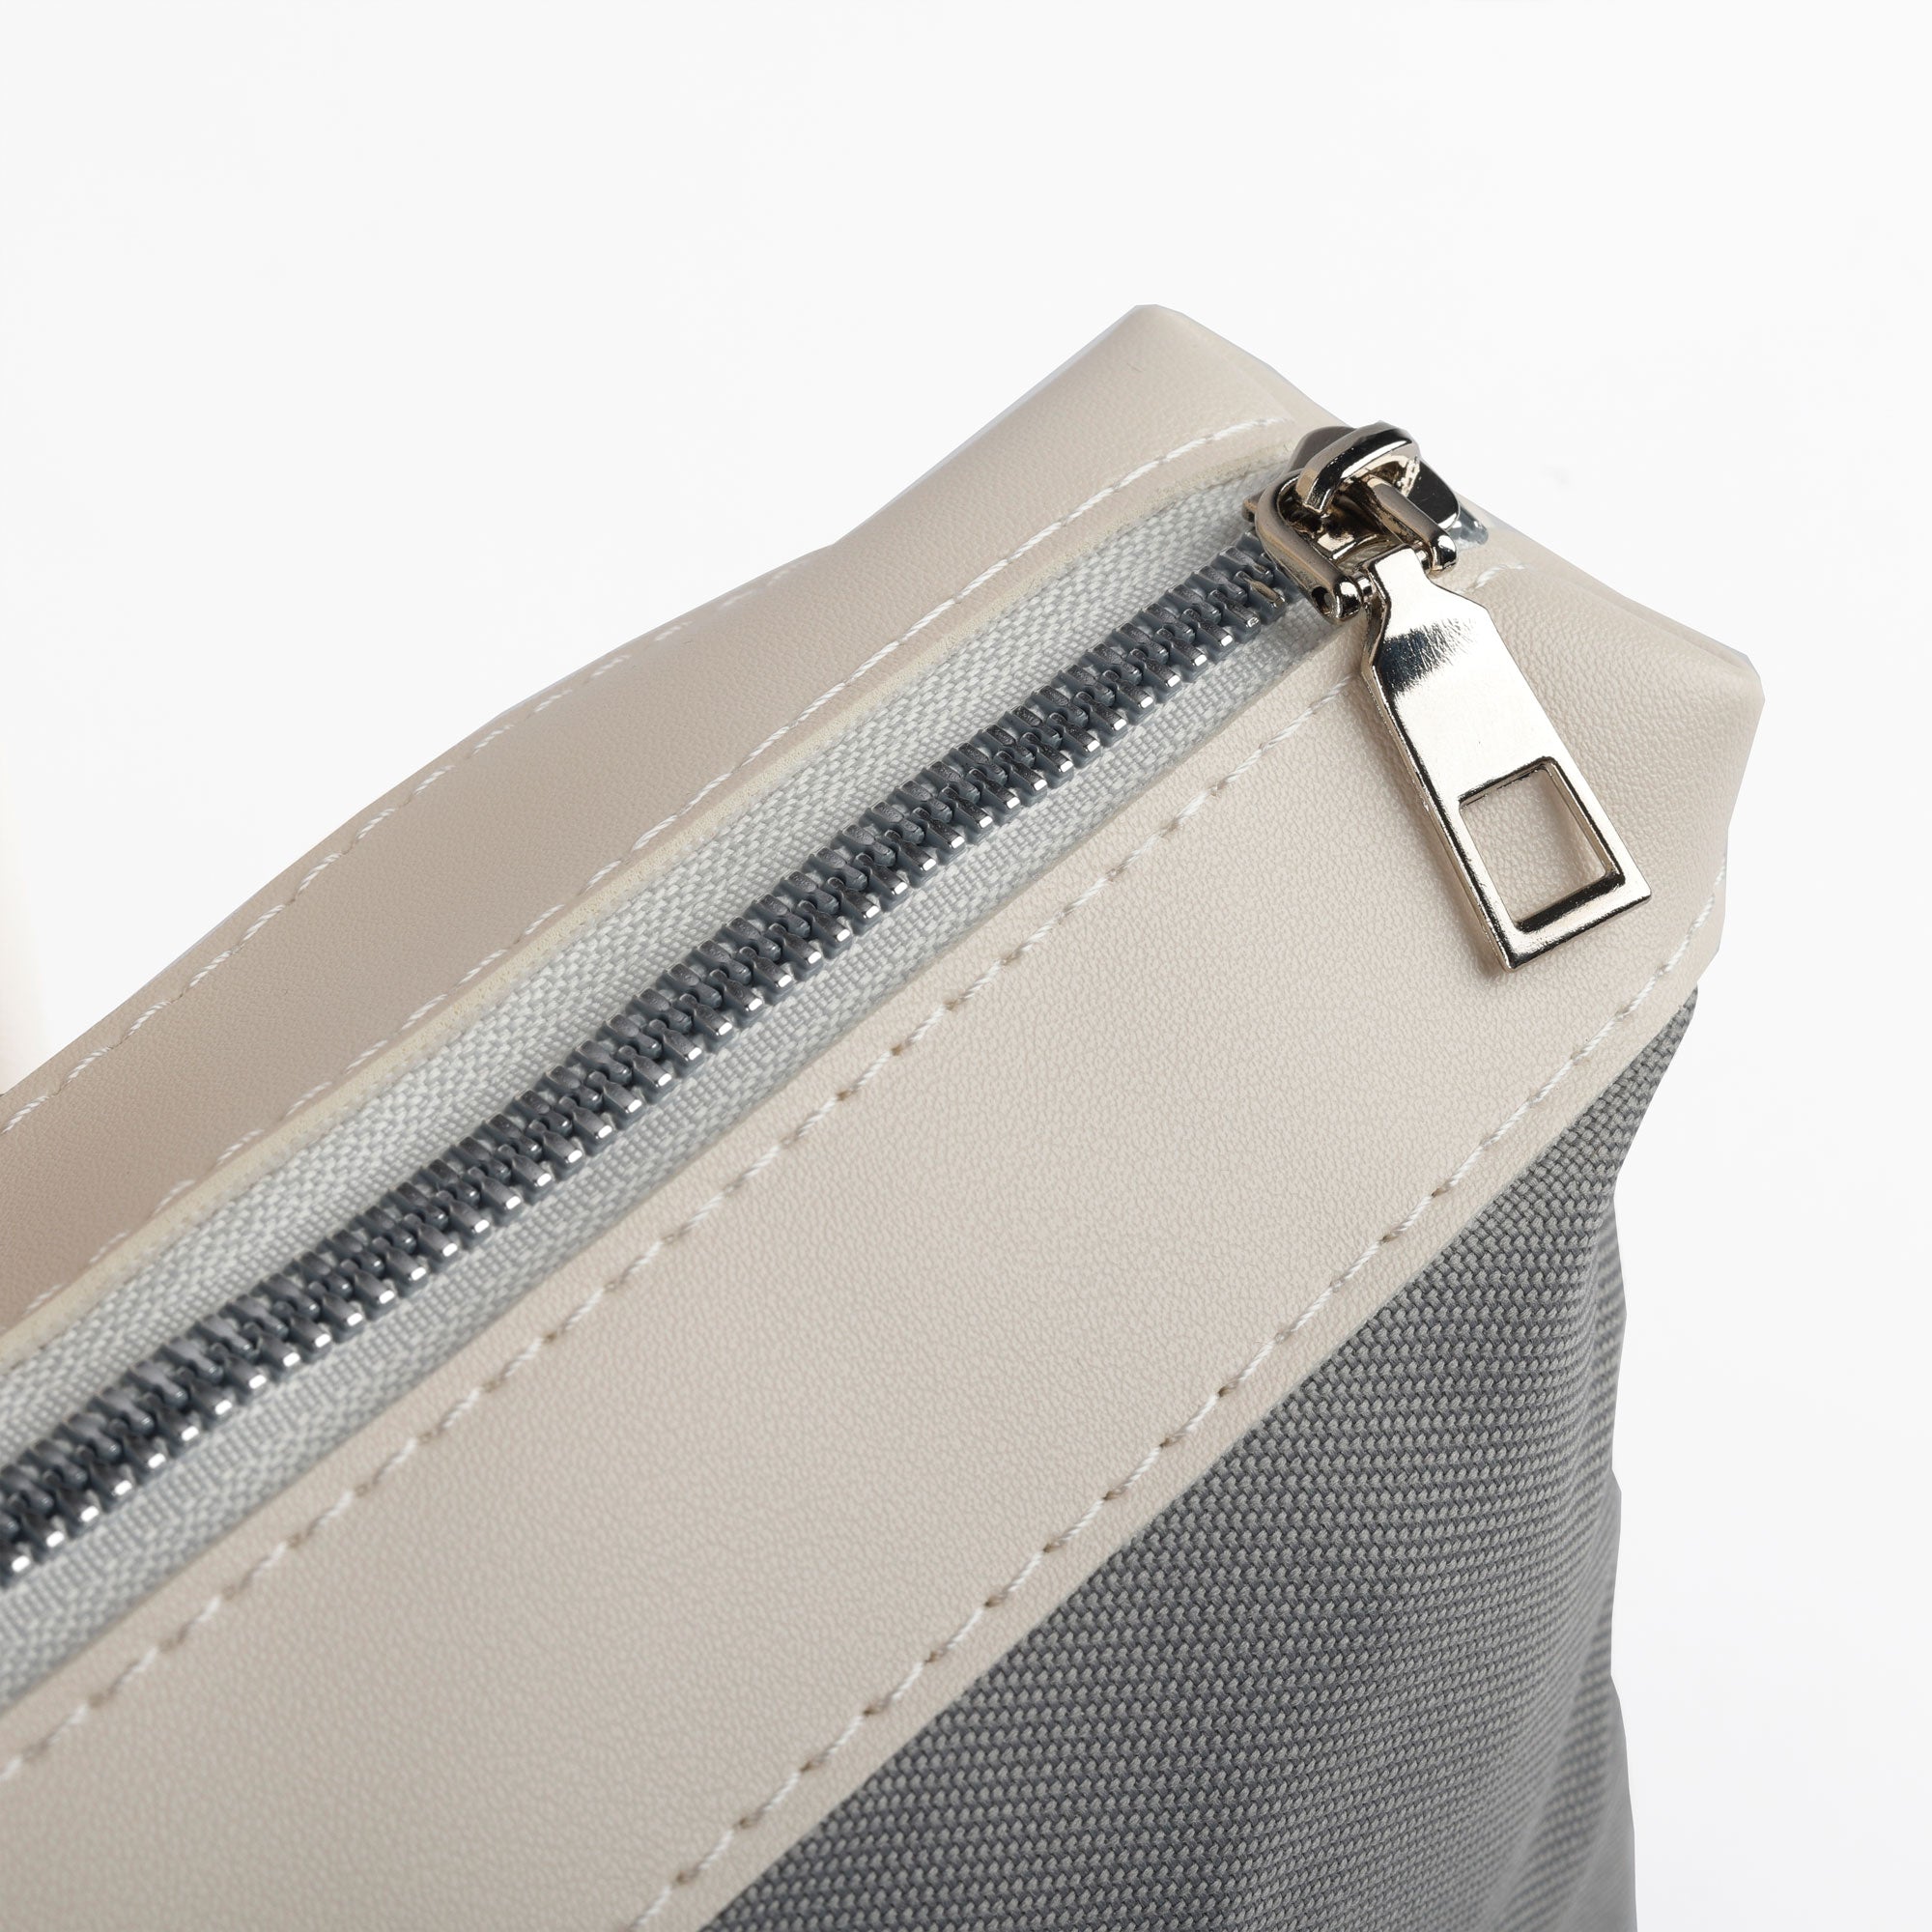 Duotone Vegan Leather Summer Handbag with Clutcher